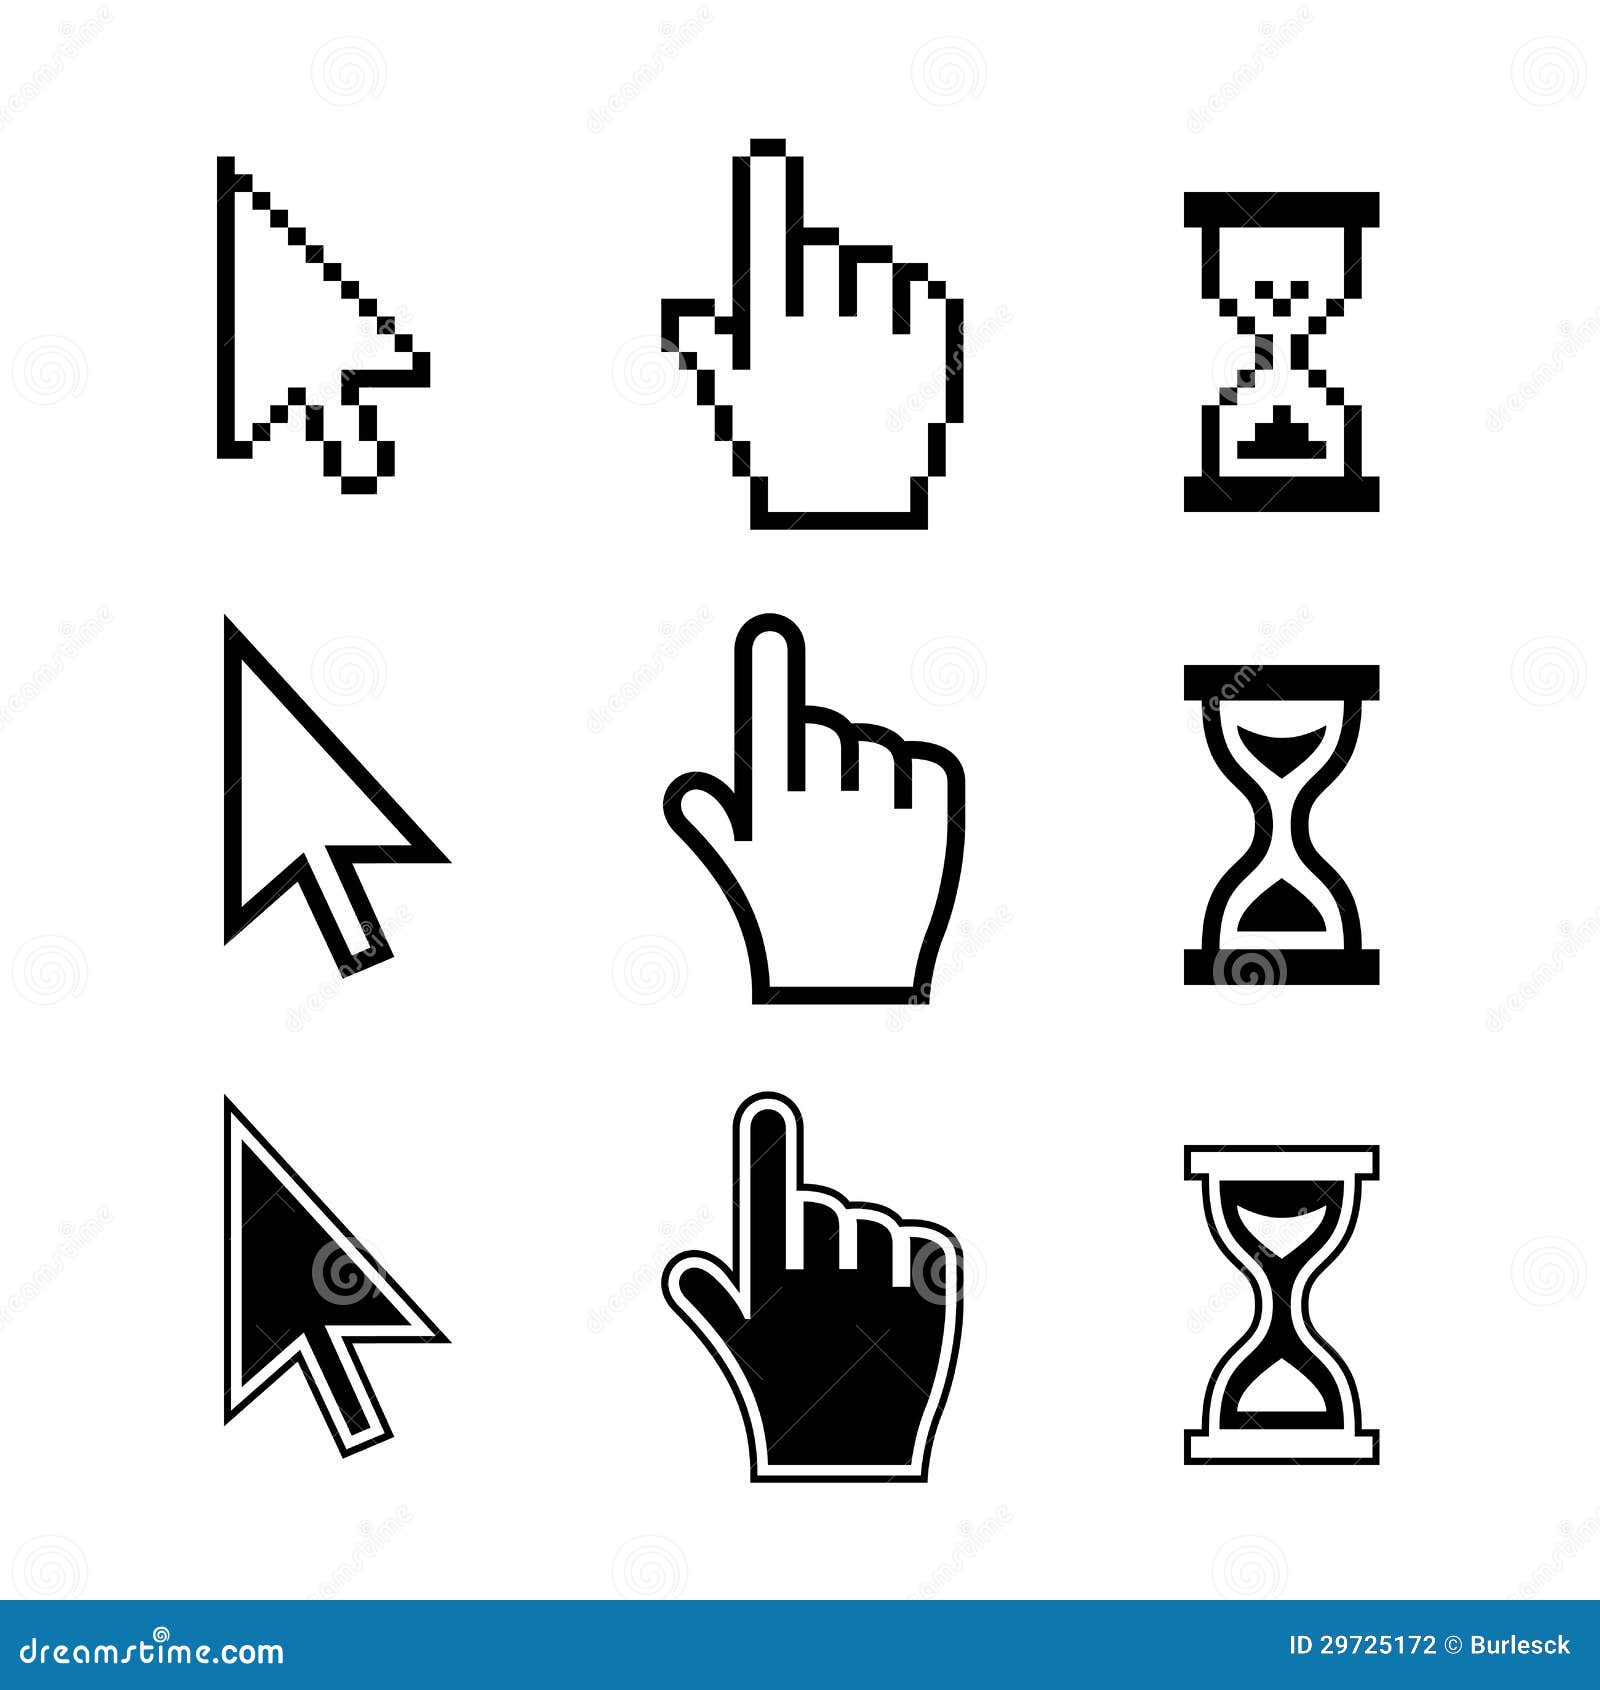 pixel cursors icons. hand arrow hourglass